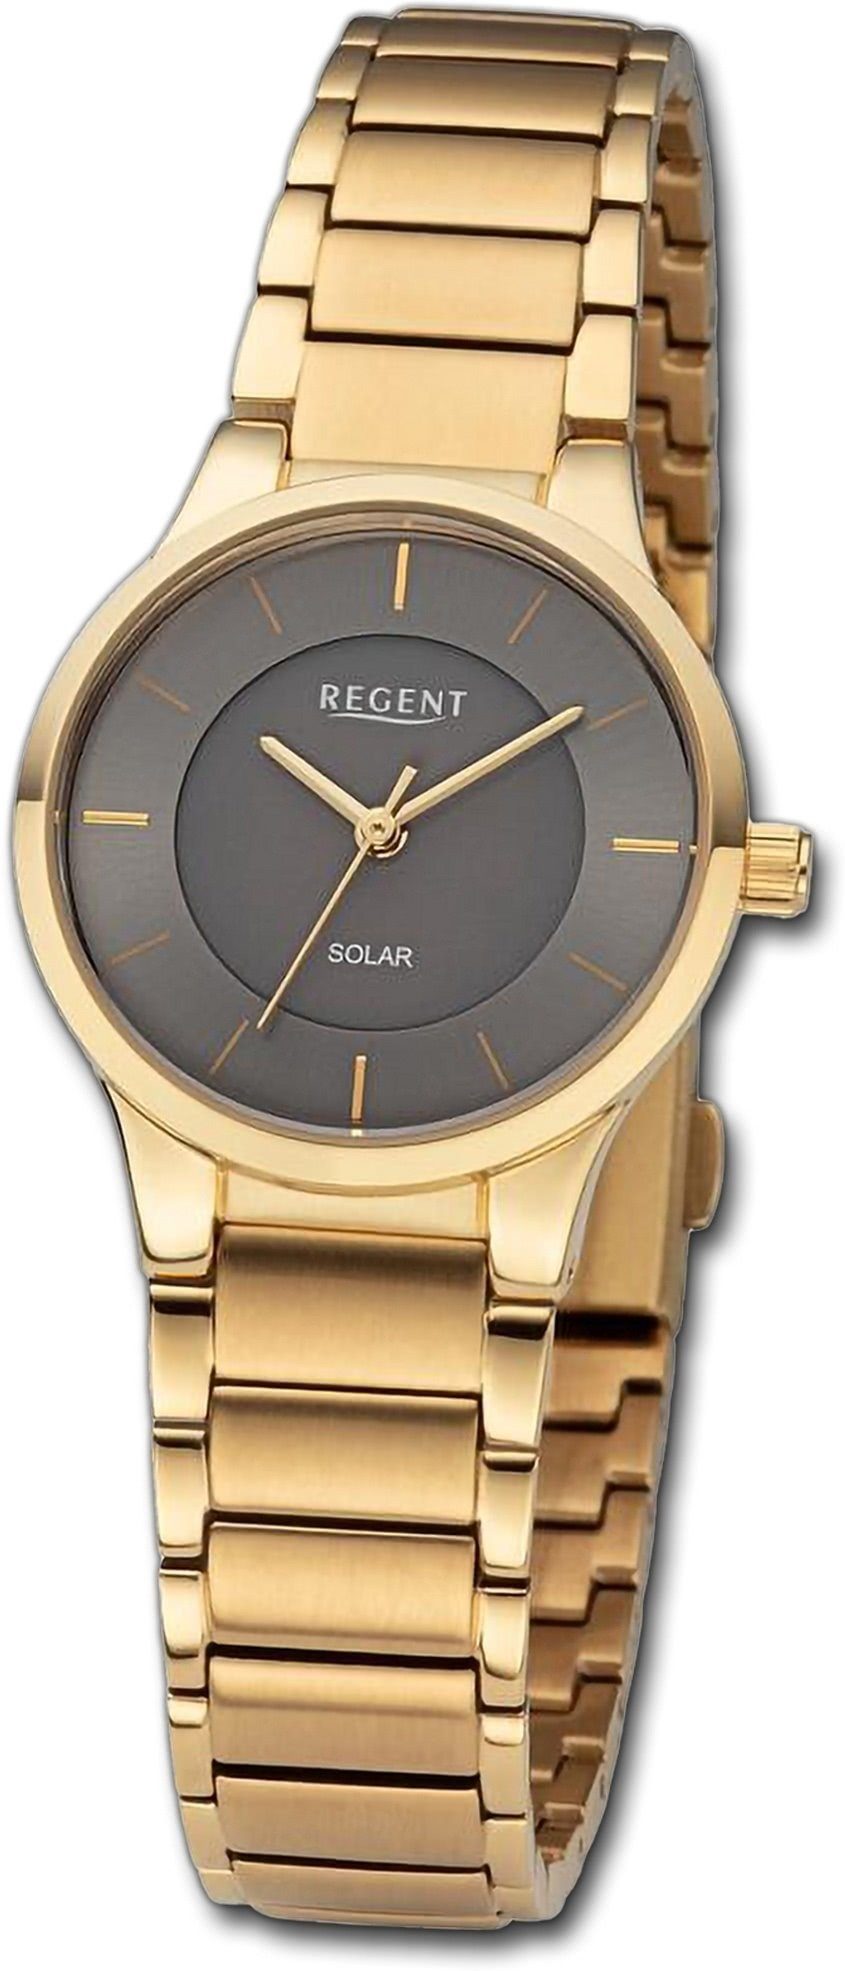 (ca. gold, Metallarmband Analog, extra groß Regent Quarzuhr Gehäuse, Regent 28mm) Damen rundes Armbanduhr Damenuhr